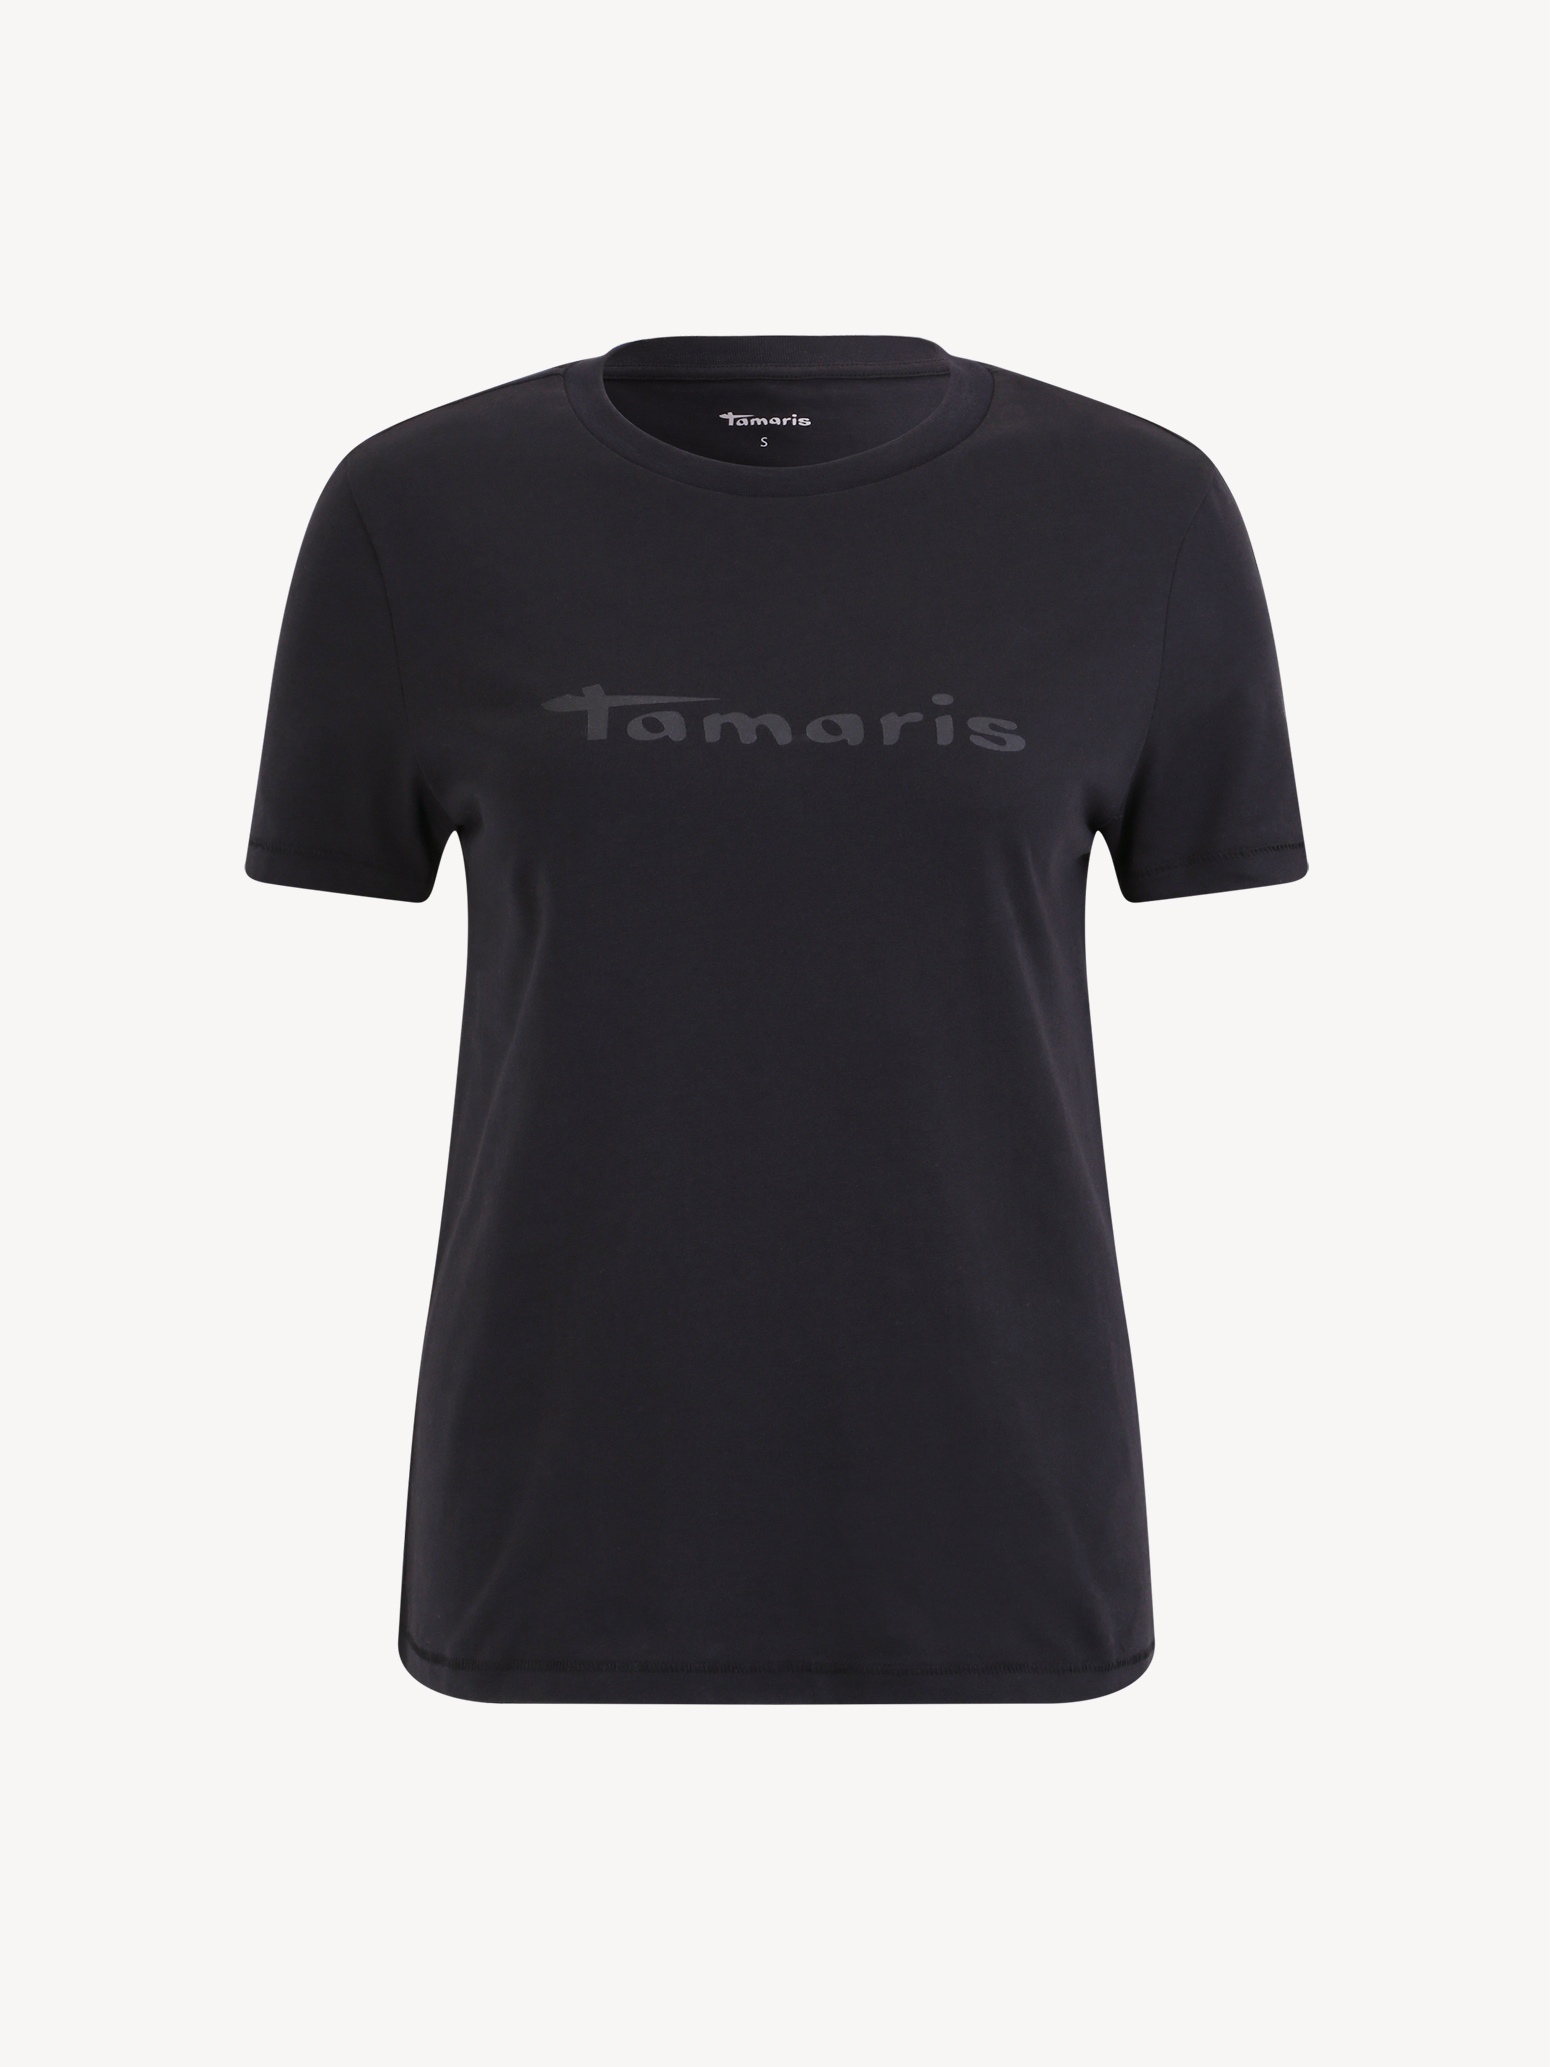 T-Shirts Tamaris TAW0121-80009: online schwarz - T-Shirt kaufen!